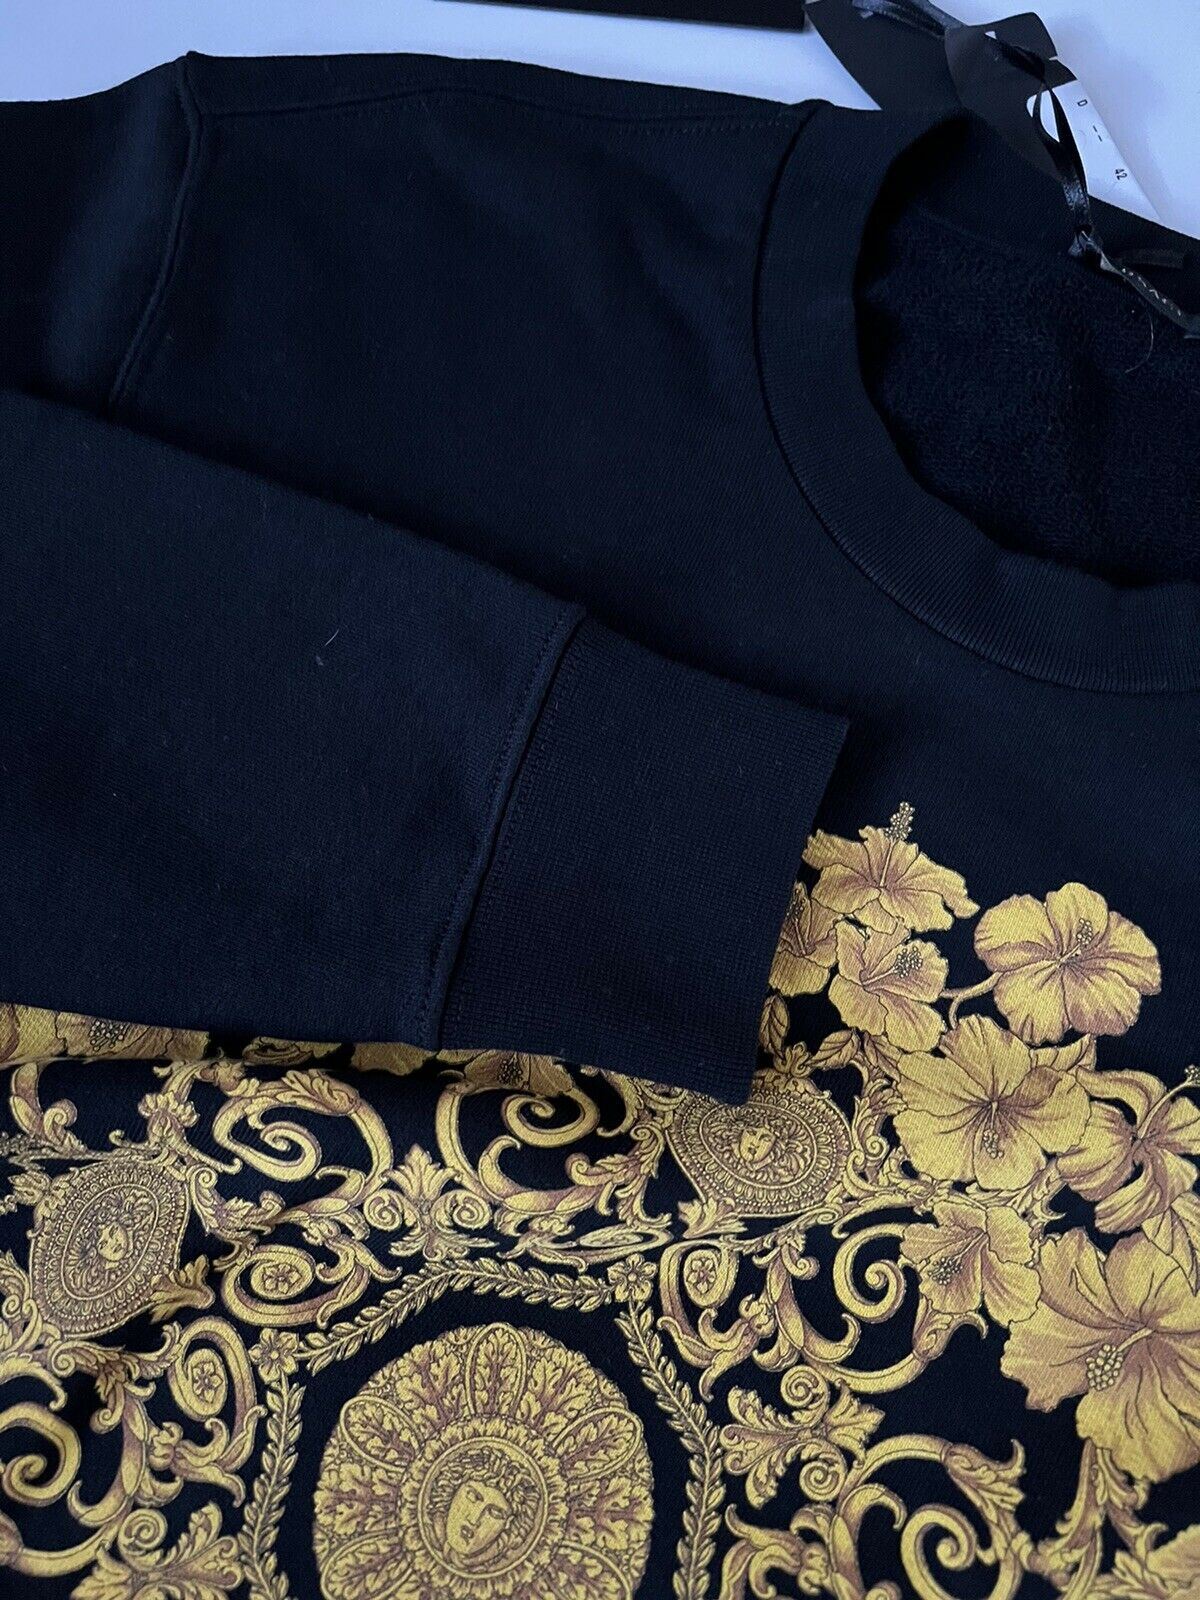 NWT $700 Versace Crewneck Women’s Black Sweater 6 US (42 Euro) Italy 86840